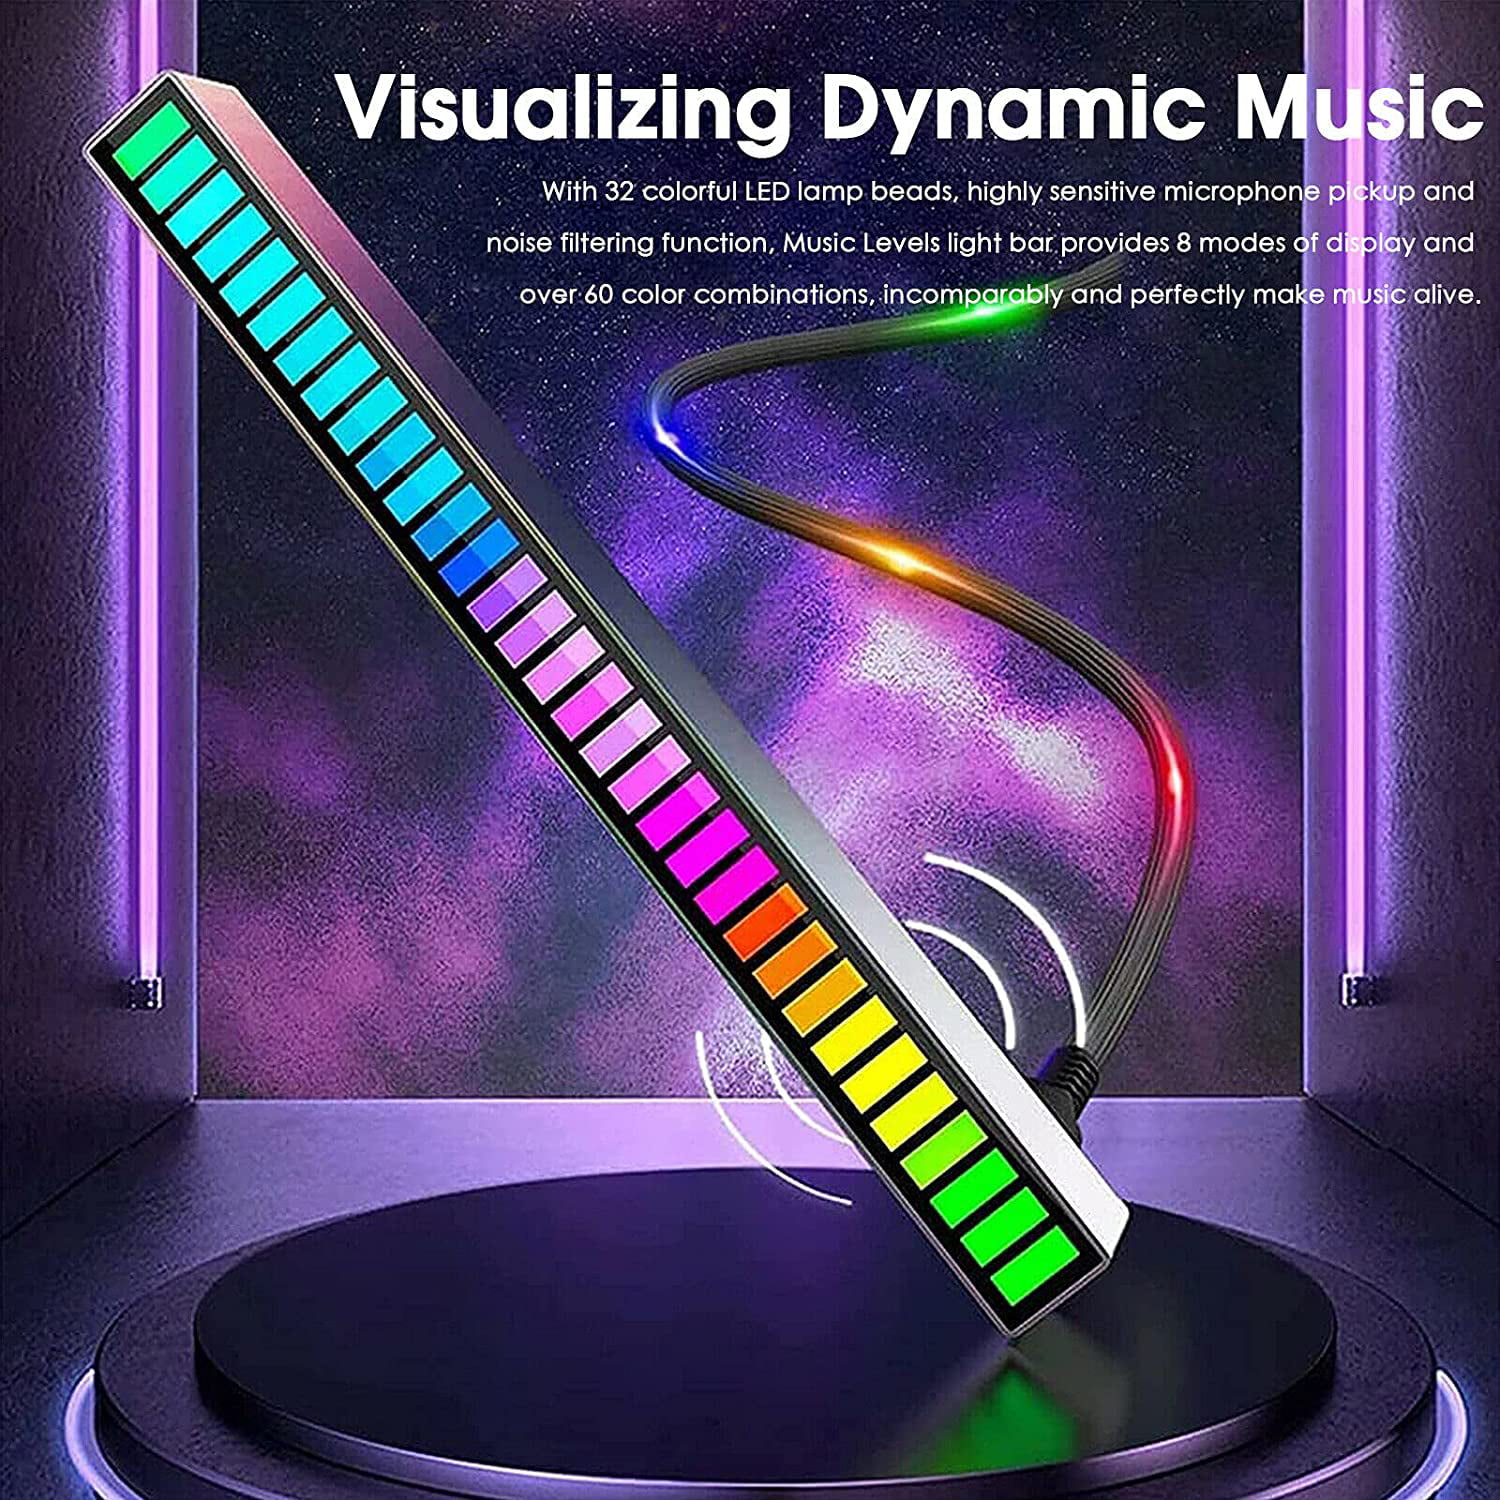 Music Levels Light RGB LED MIC Sound Level Meter Audio Spectrum Display Analyzer 